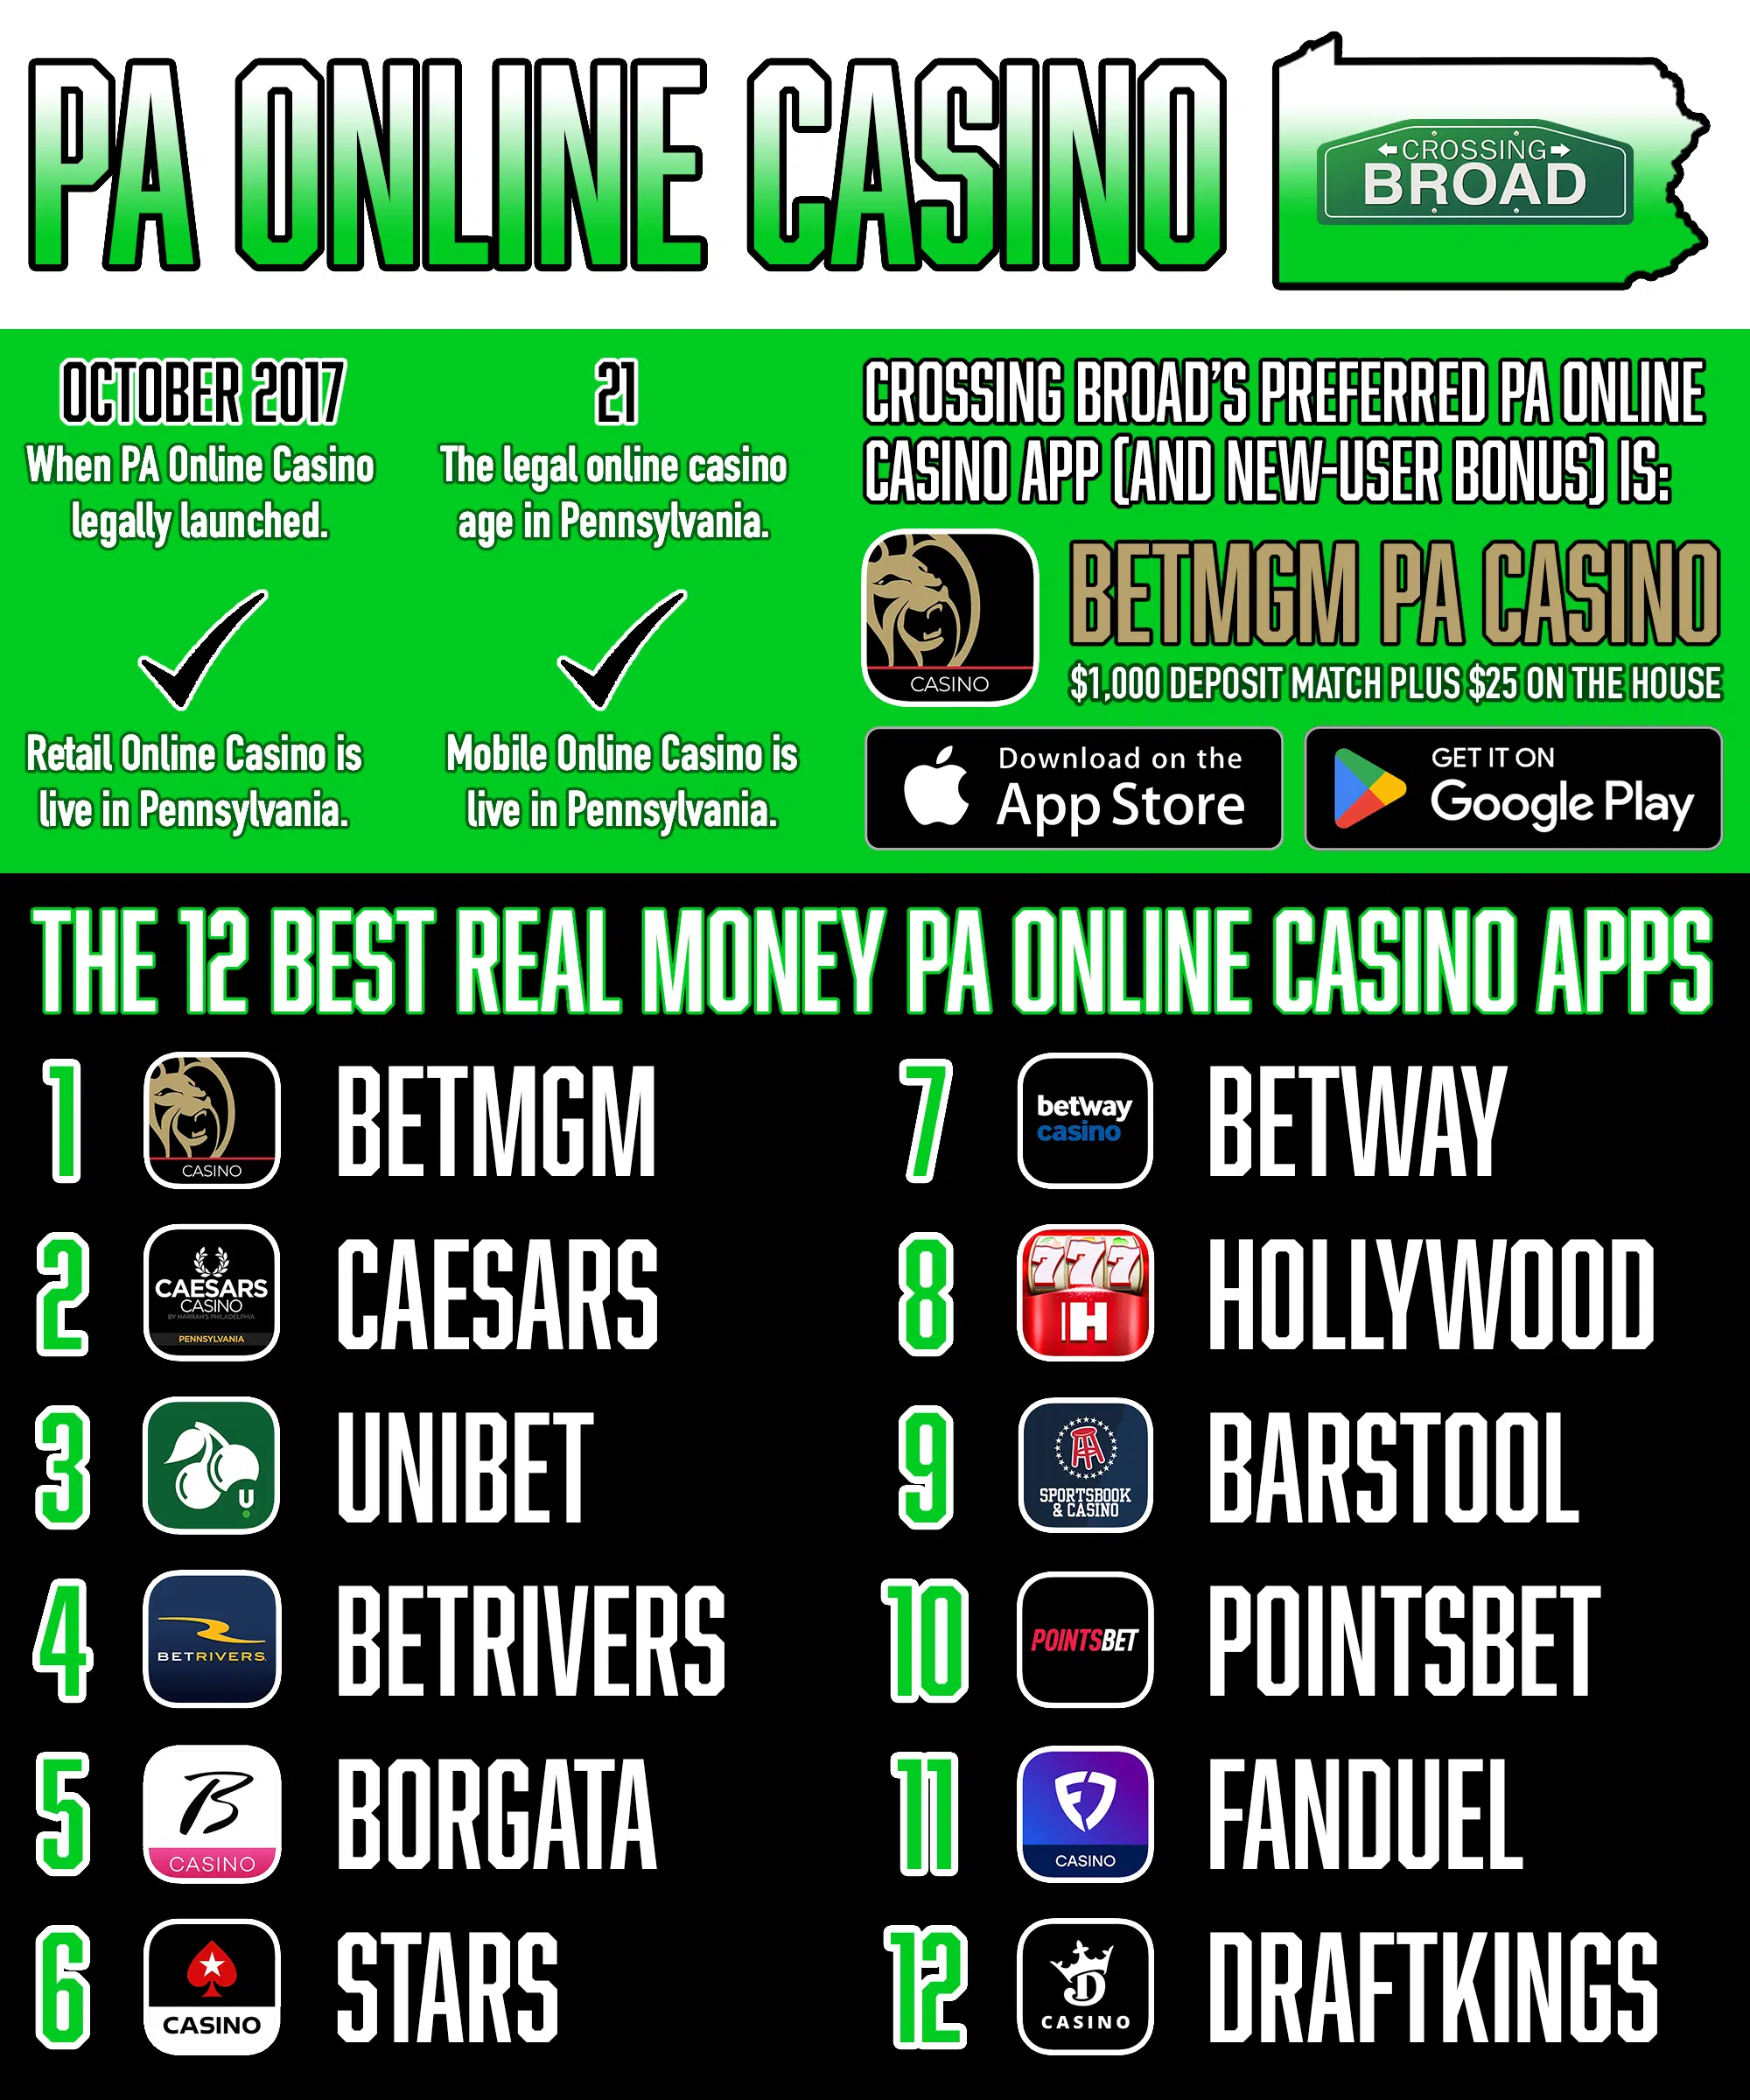 PA Online Casino, 12 Best Real Money Apps